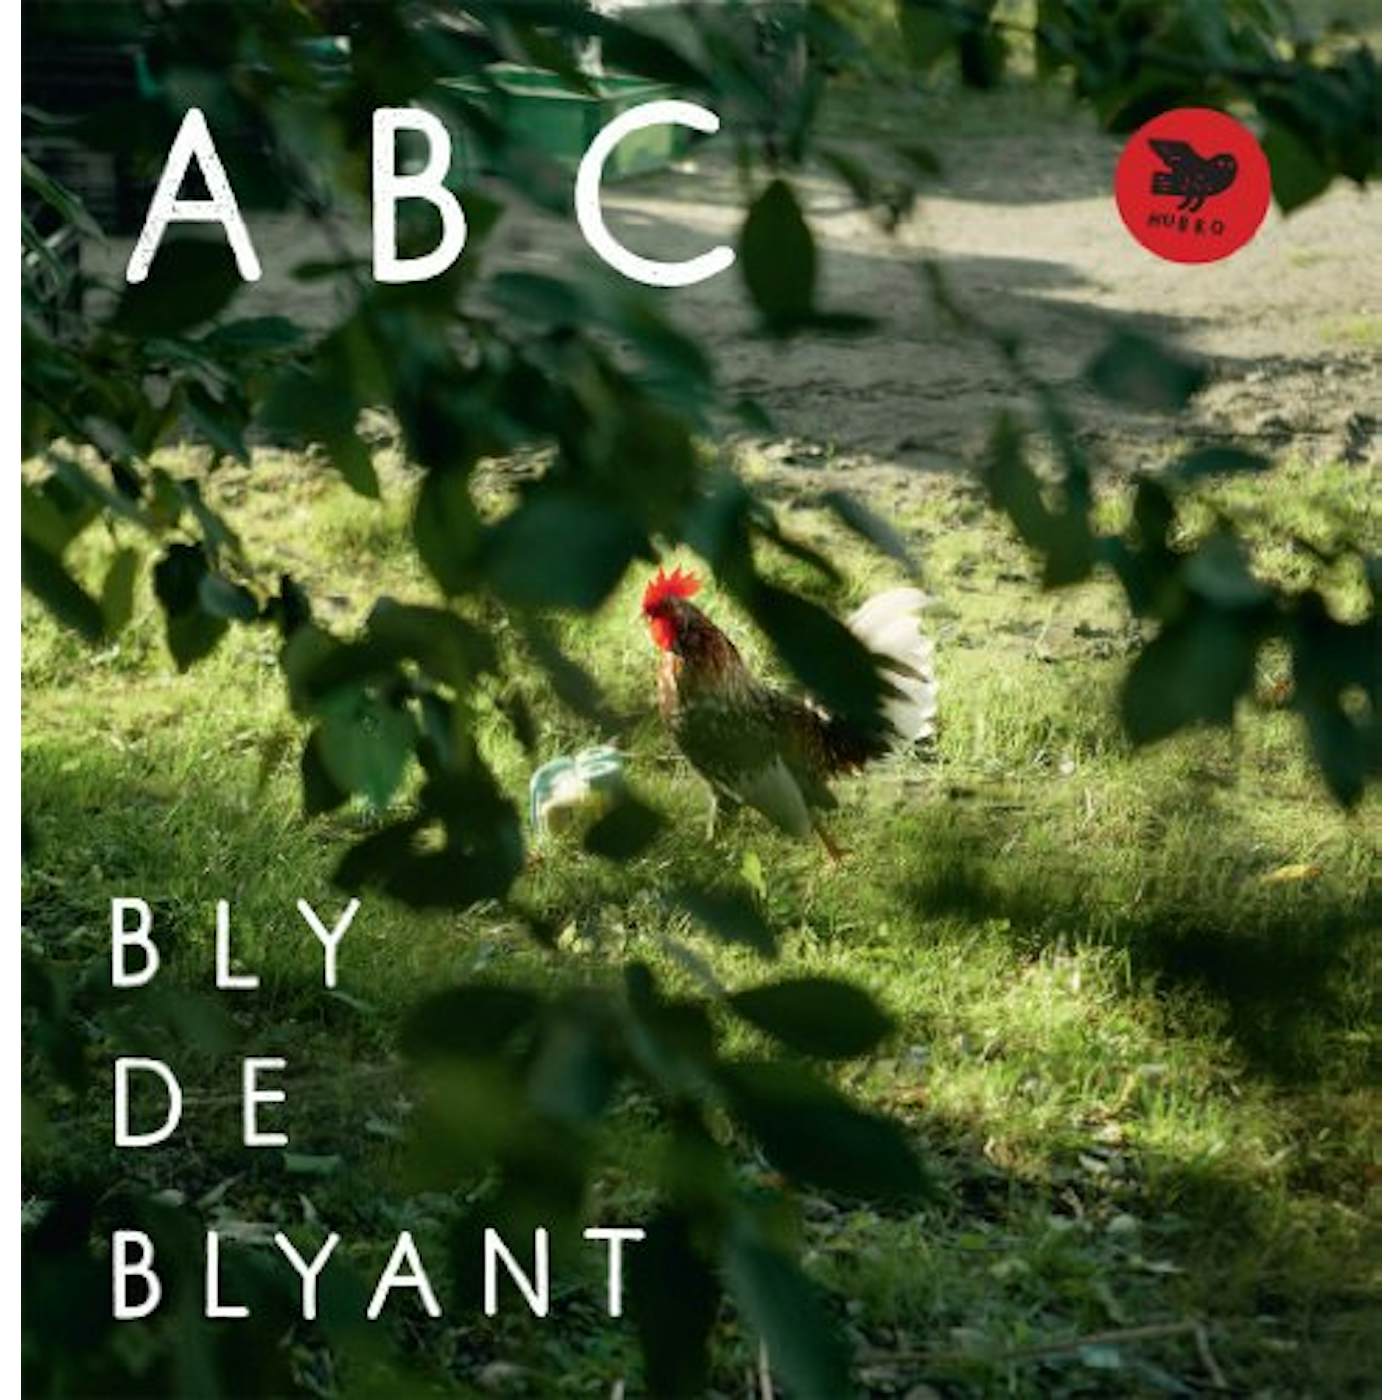 Bly de Blyant ABC Vinyl Record